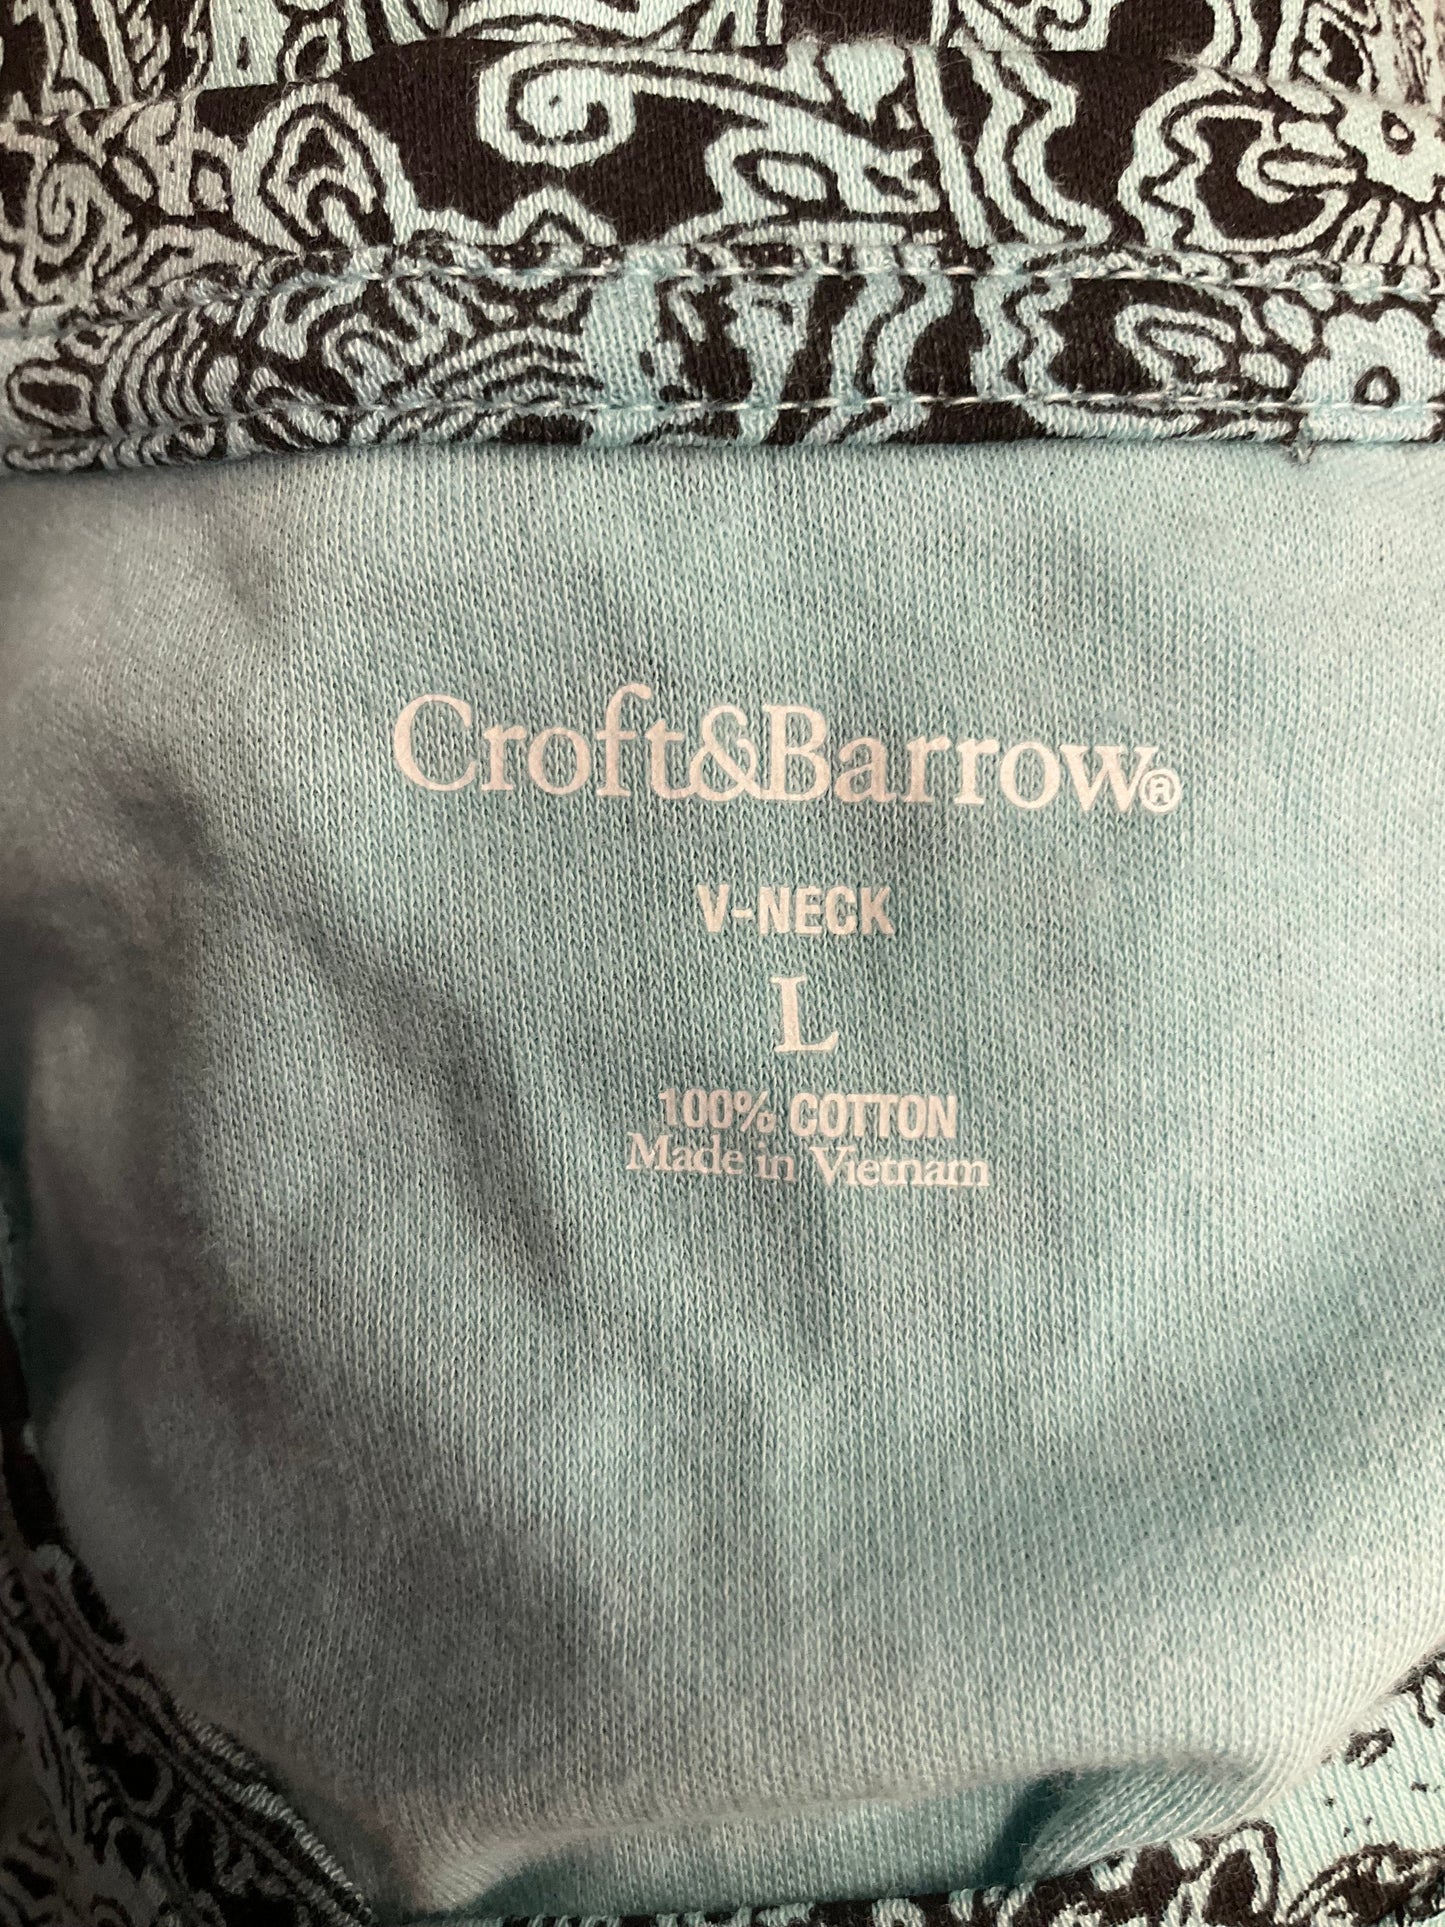 Paisley Print Top Short Sleeve Croft And Barrow, Size L